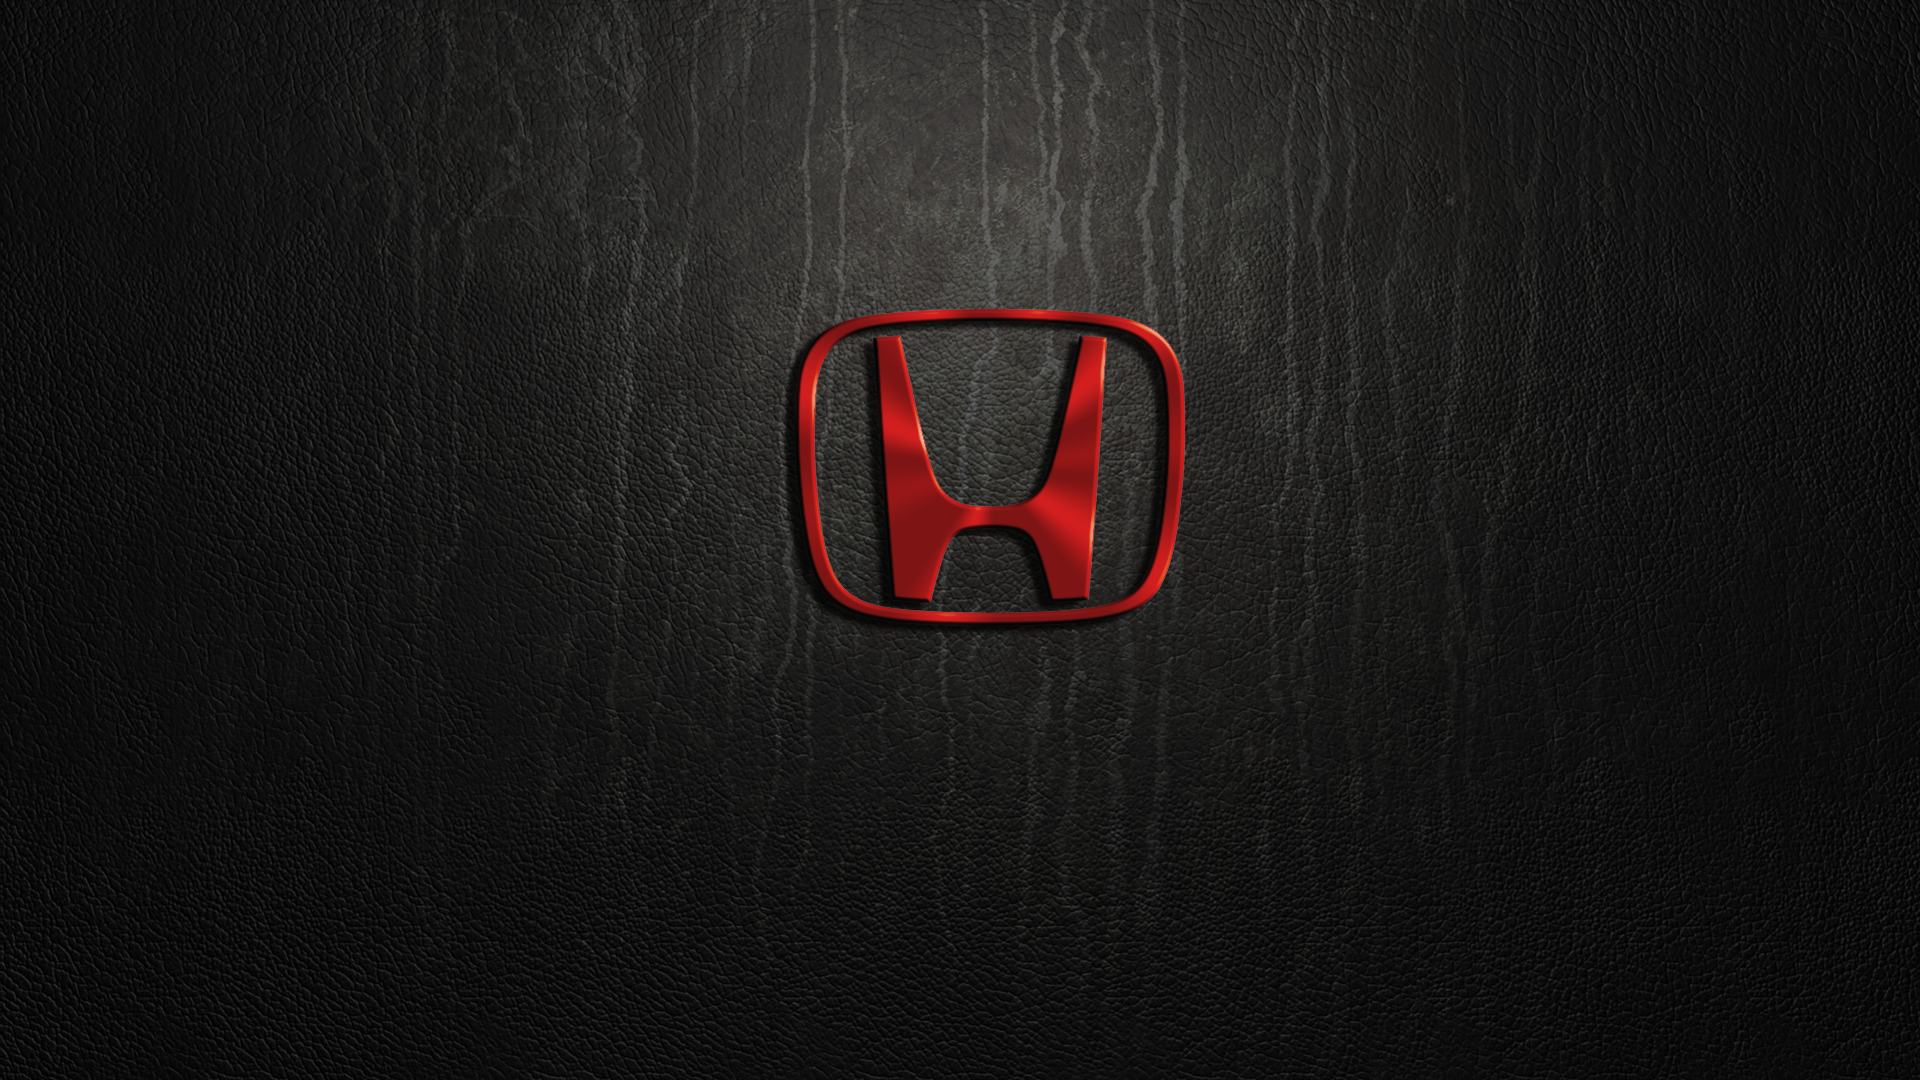 Honda Logo Photos Download Free Desktop Wallpaper Images Pictures